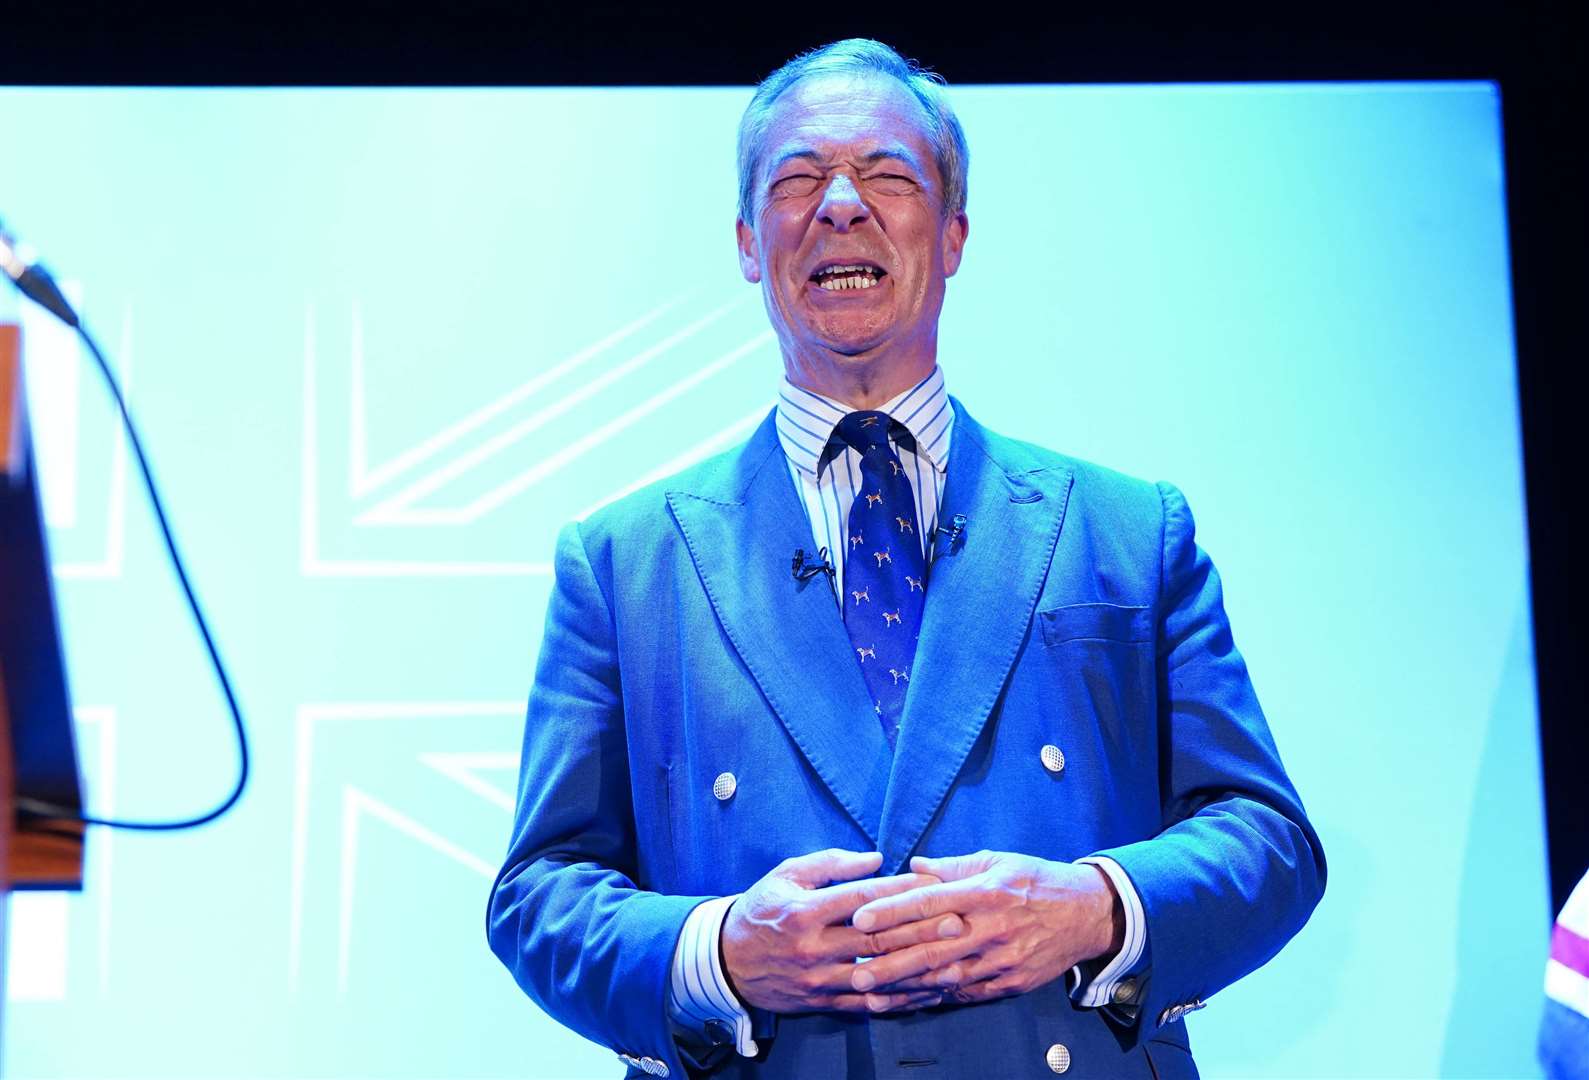 Reform UK leader Nigel Farage speaking at Princes Theatre in Clacton (Ian West/PA)